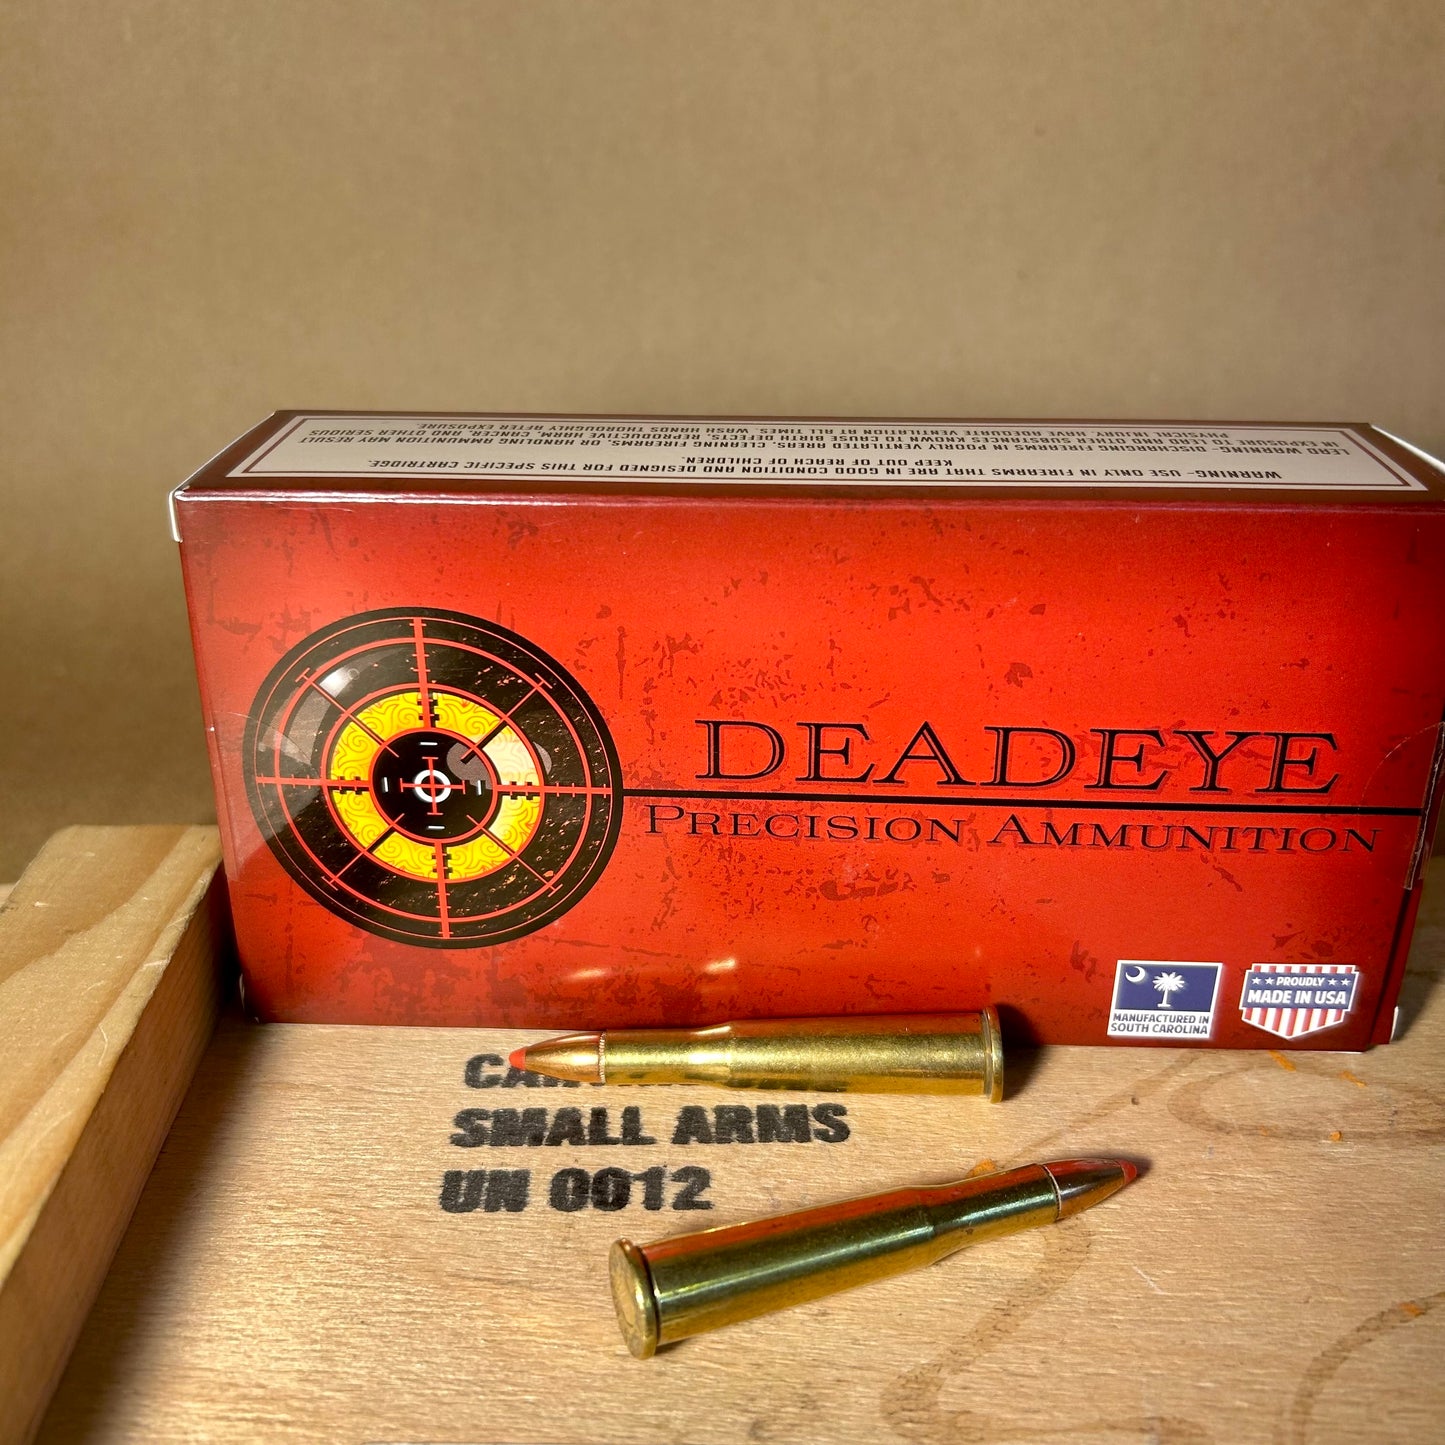 20 Round Box Deadeye .25-35 Win. Ammo 110gr Hornady FTX - New